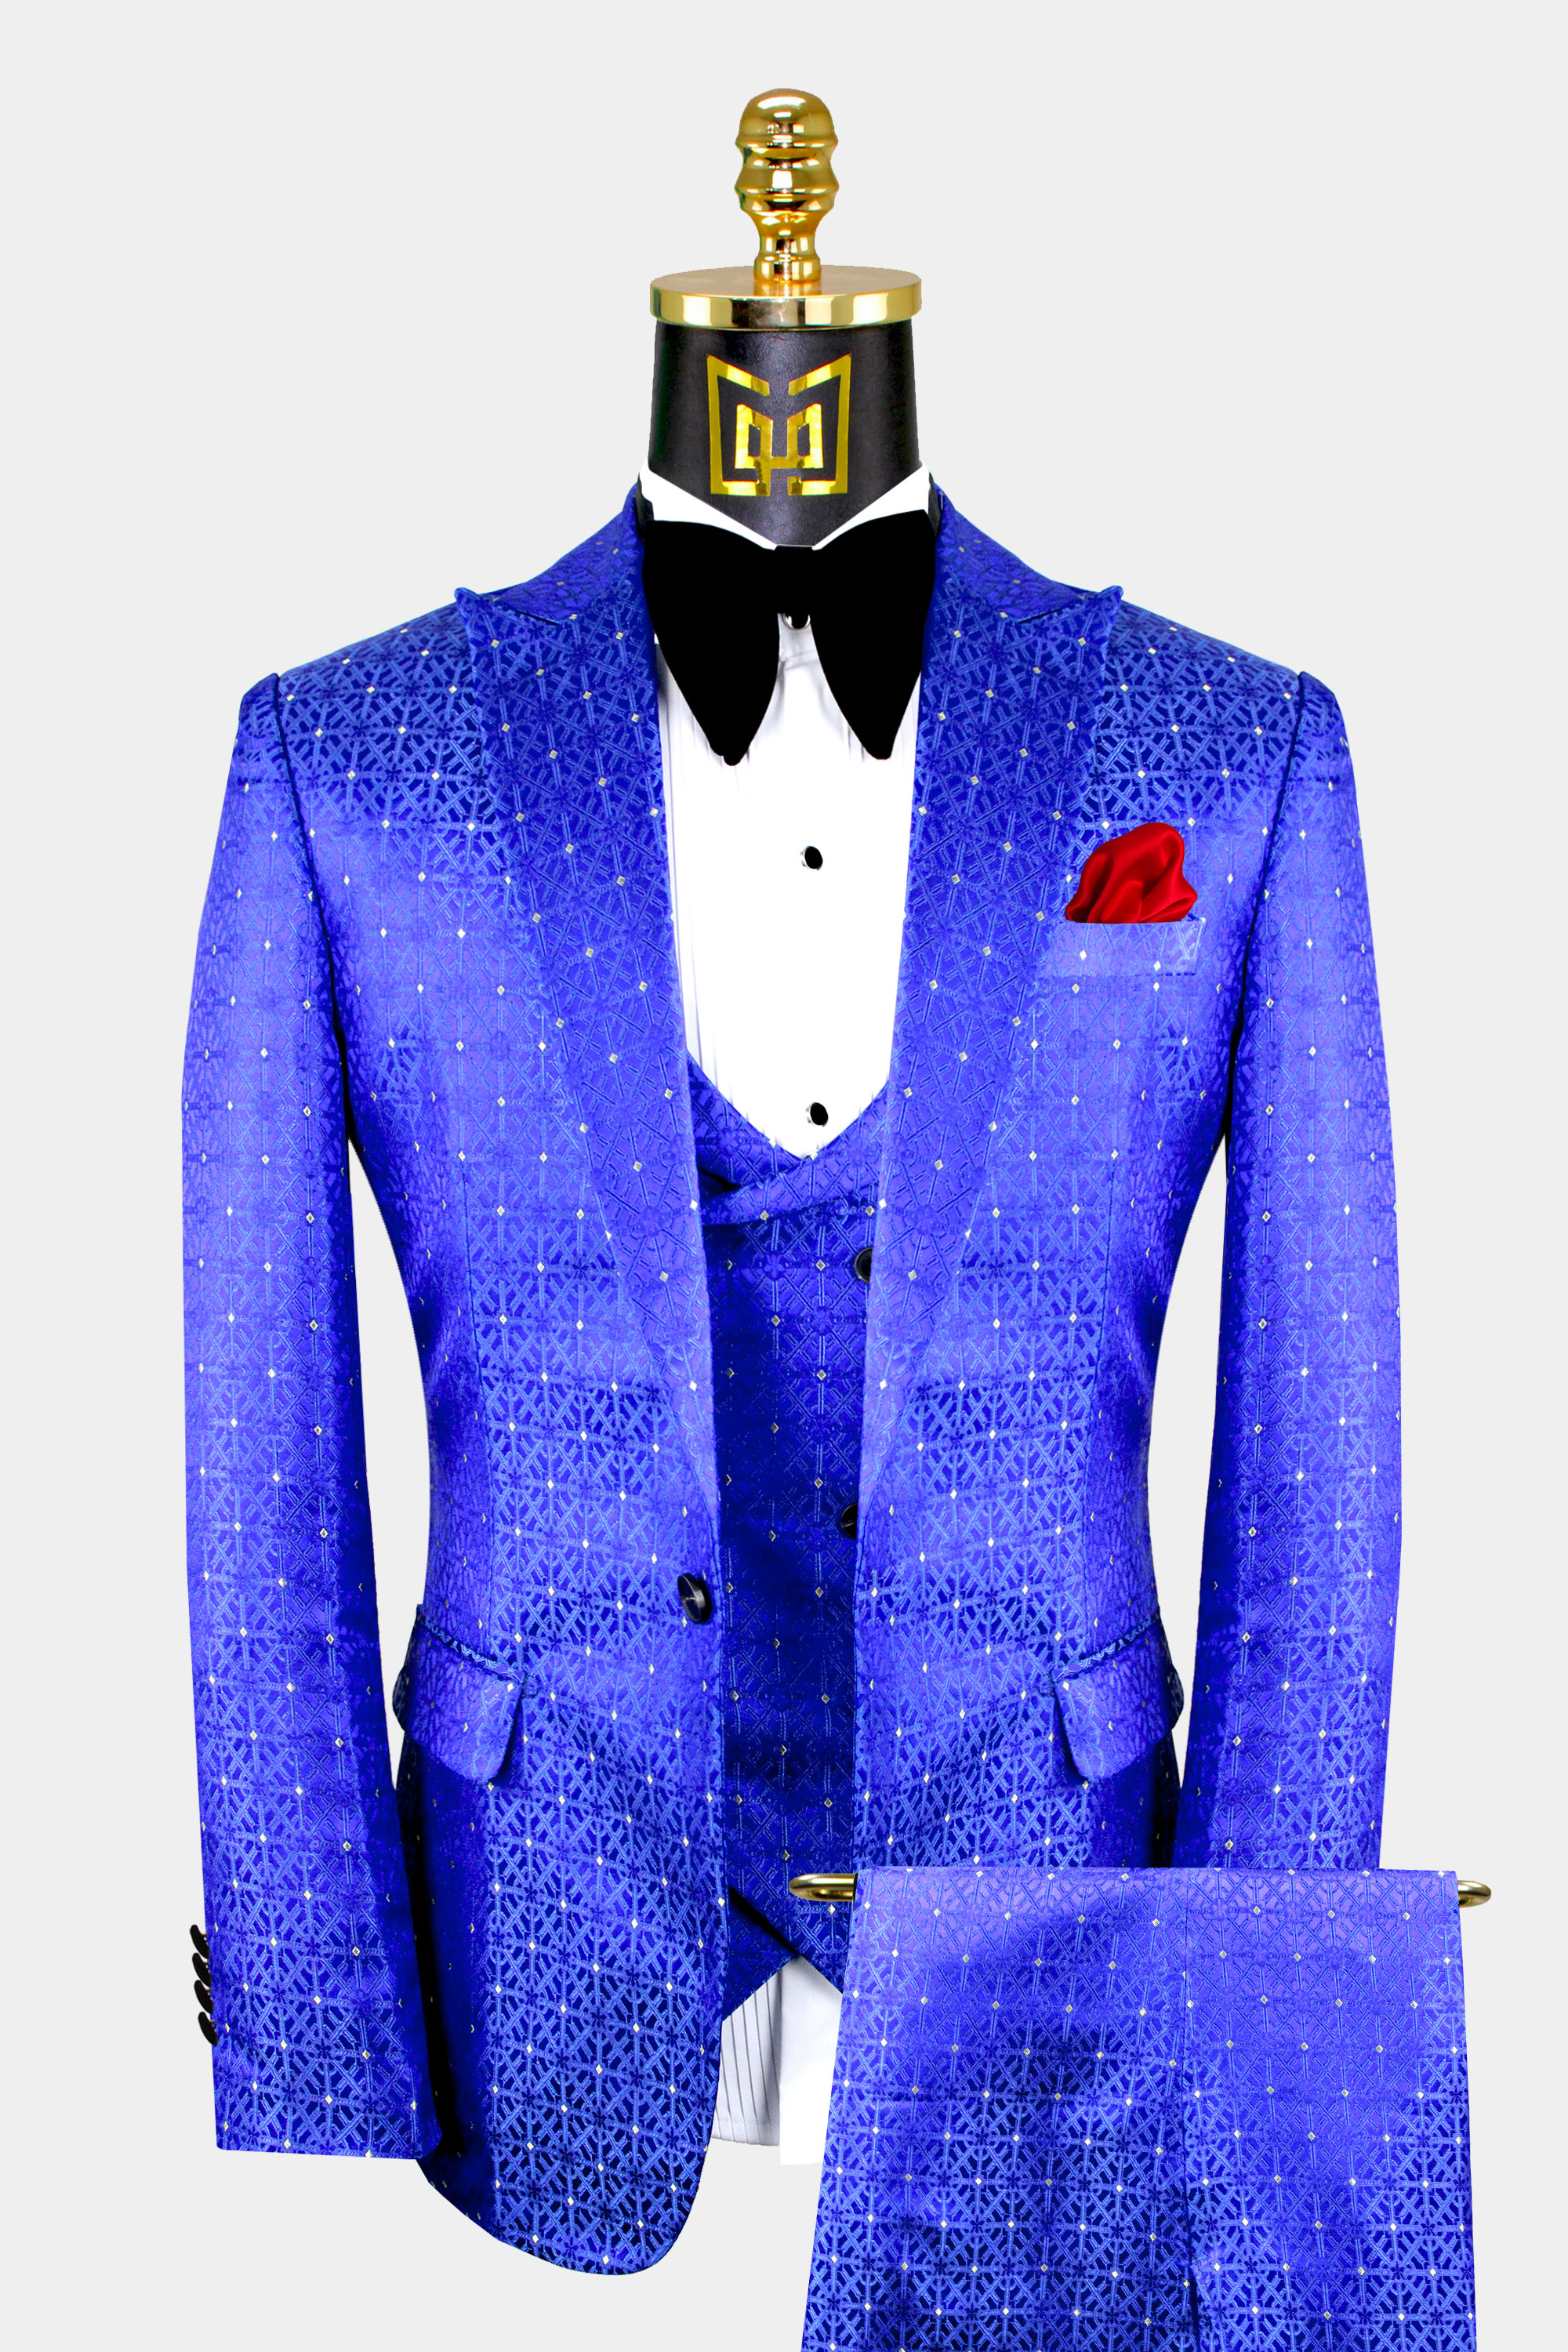 singen Photoelektrisch äußerst blue suit men s style Tonhöhe Caroline Axt